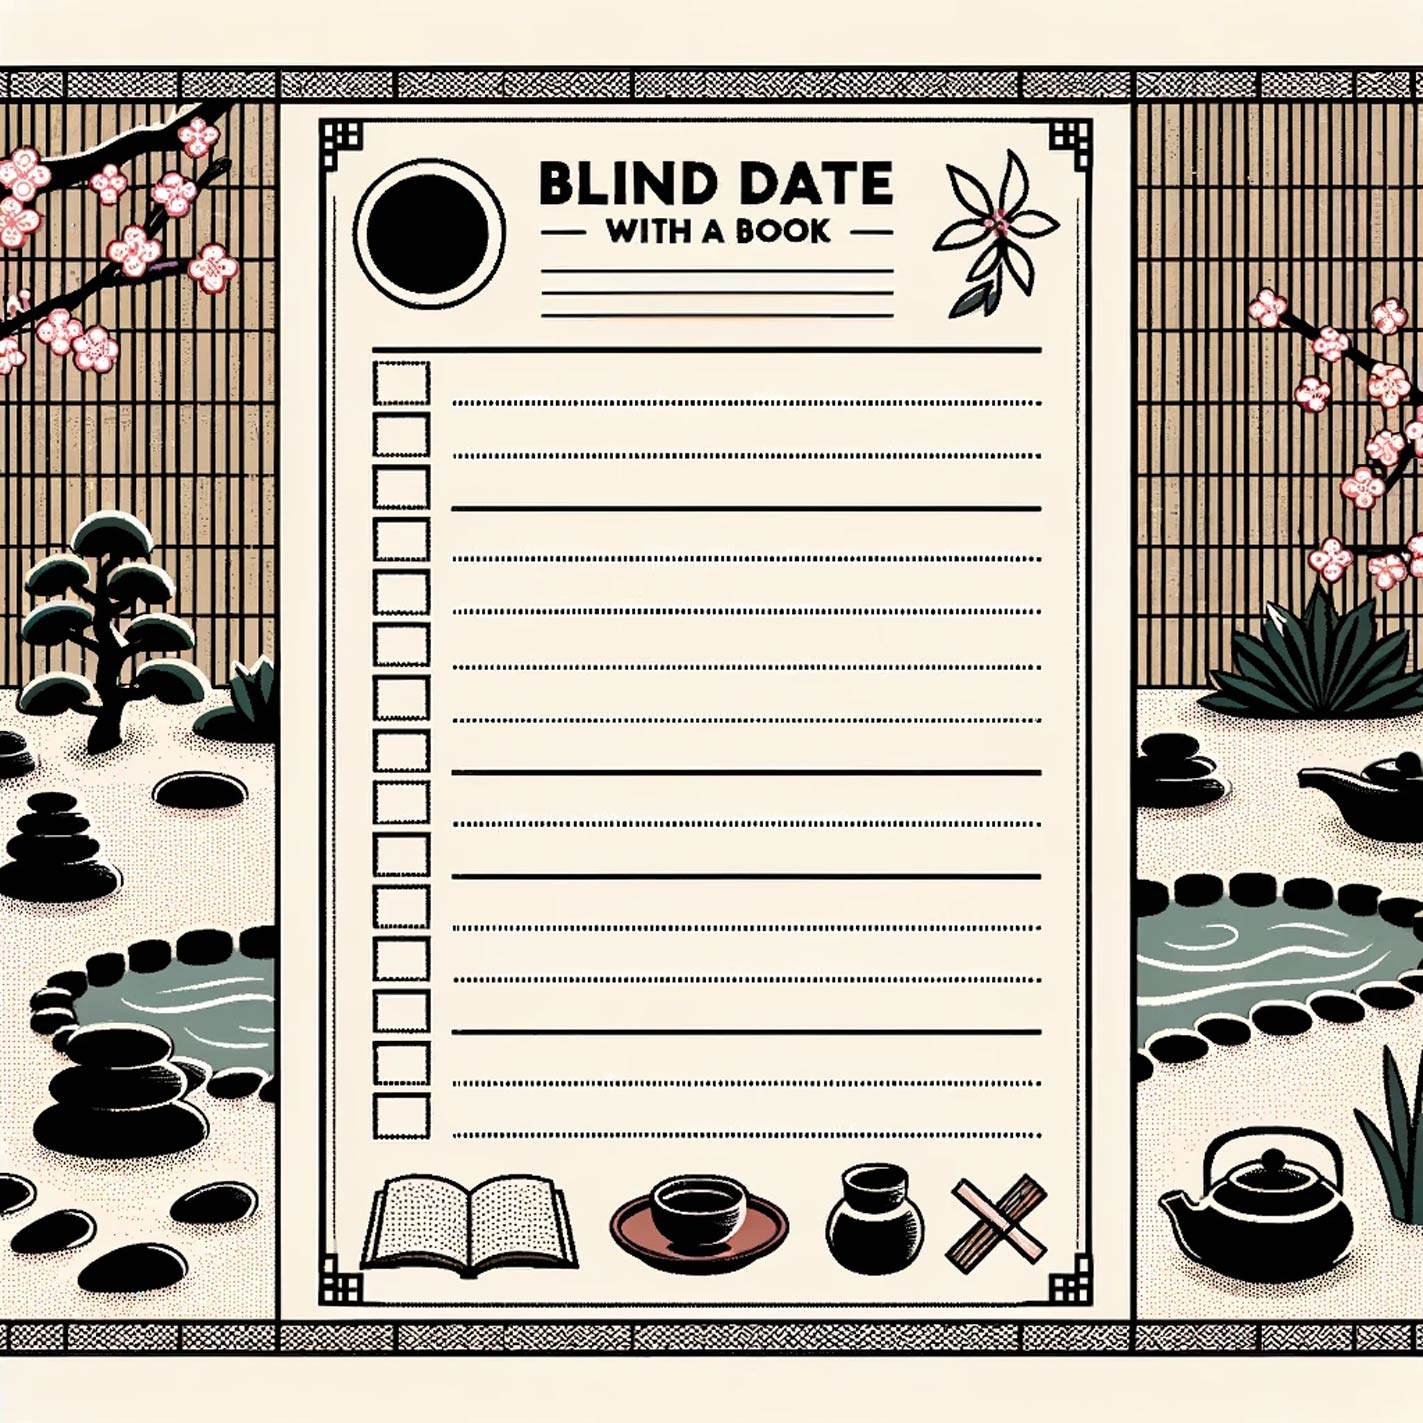 Blind Date With A Book Free Template - Zen Garden